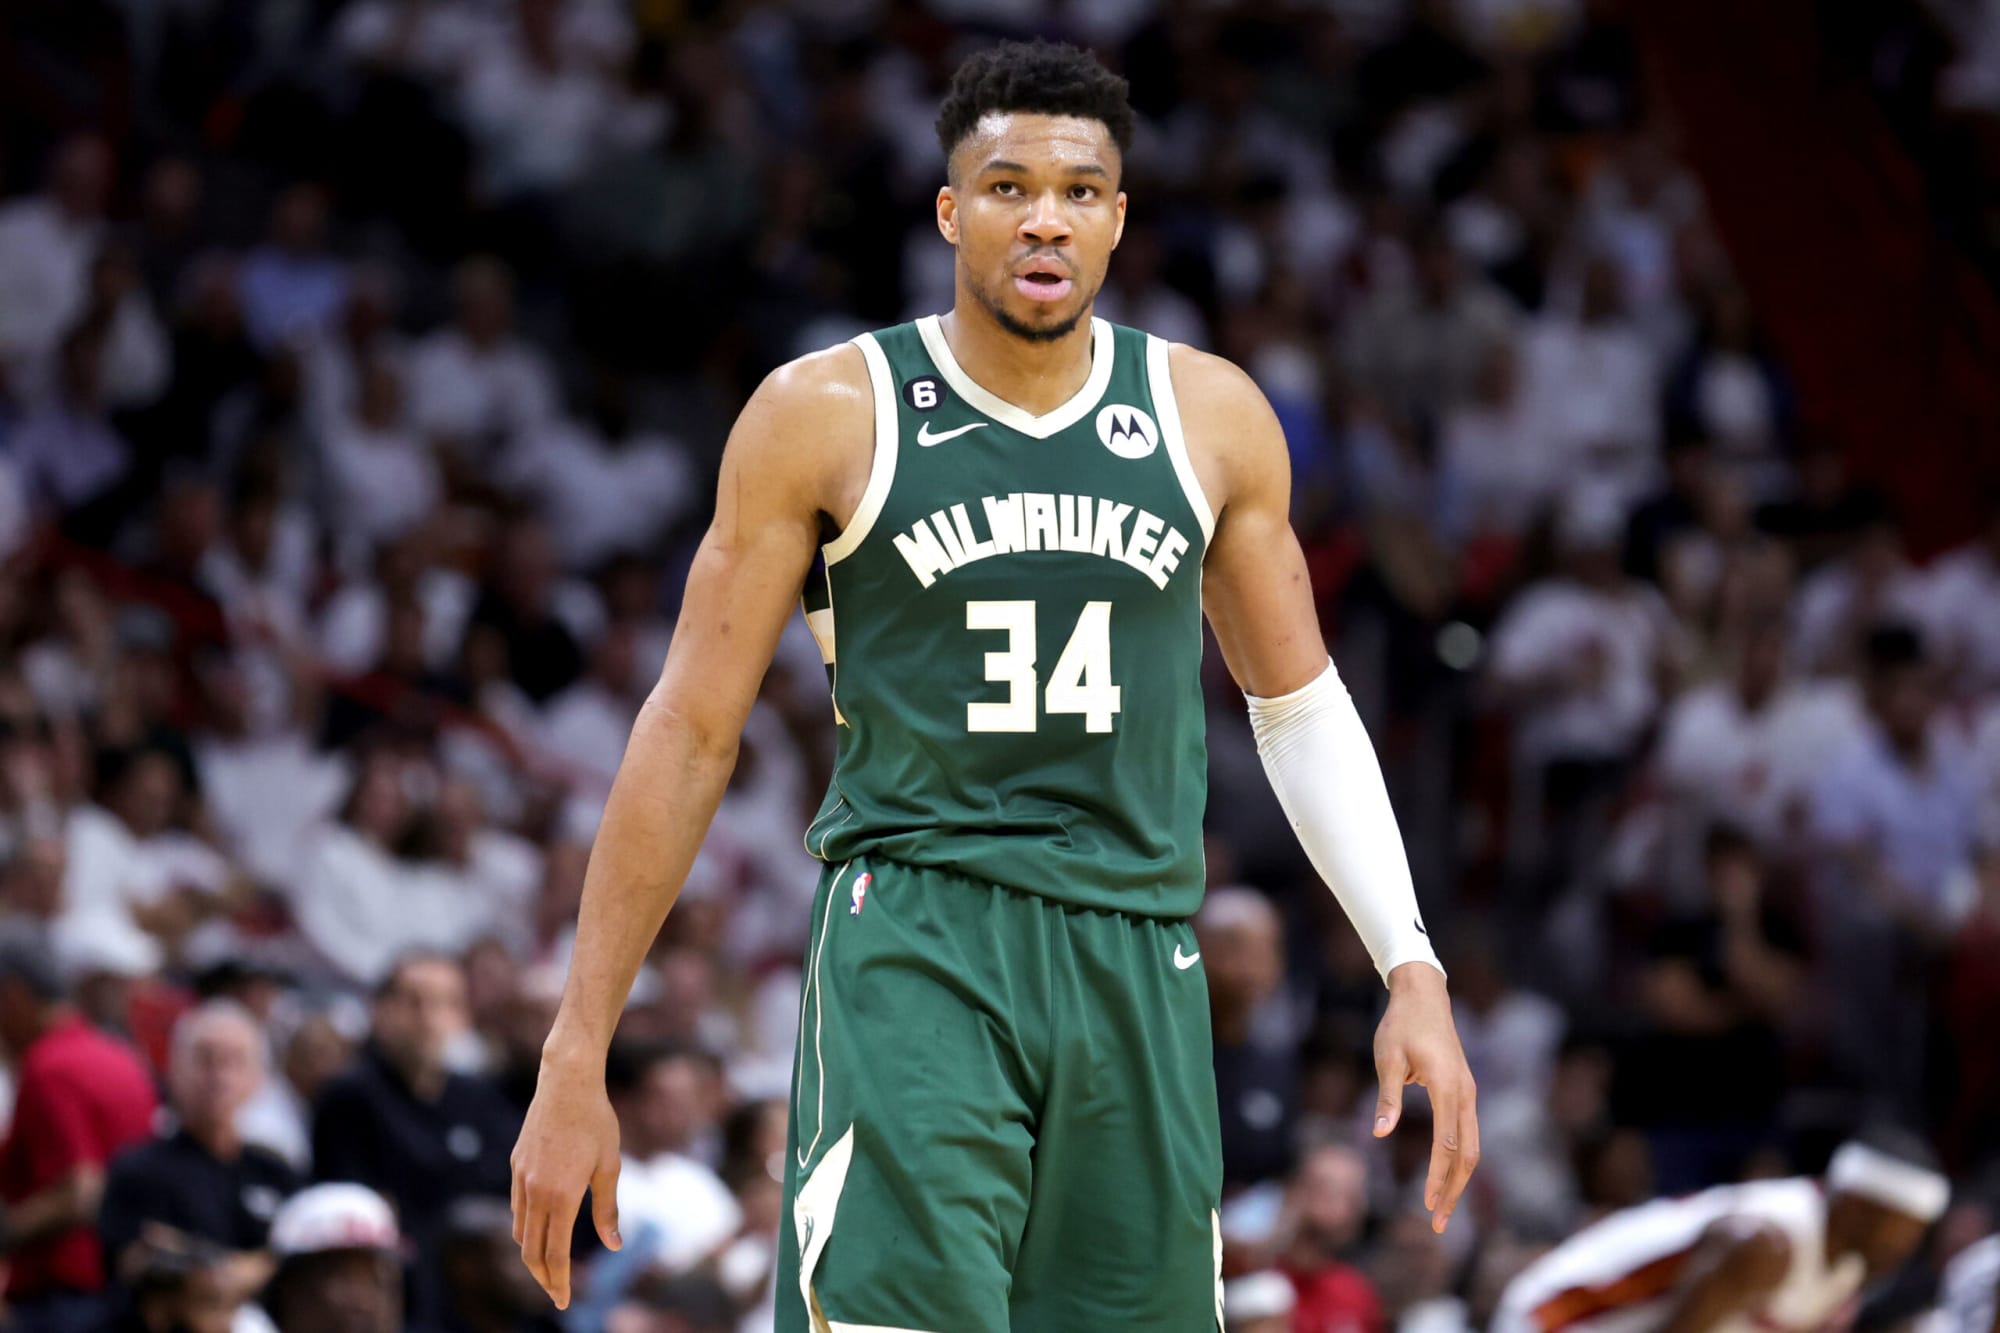  Celtics' Big Dream: Eyeing NBA Superstar Giannis Antetokounmpo for Next Mega Trade?